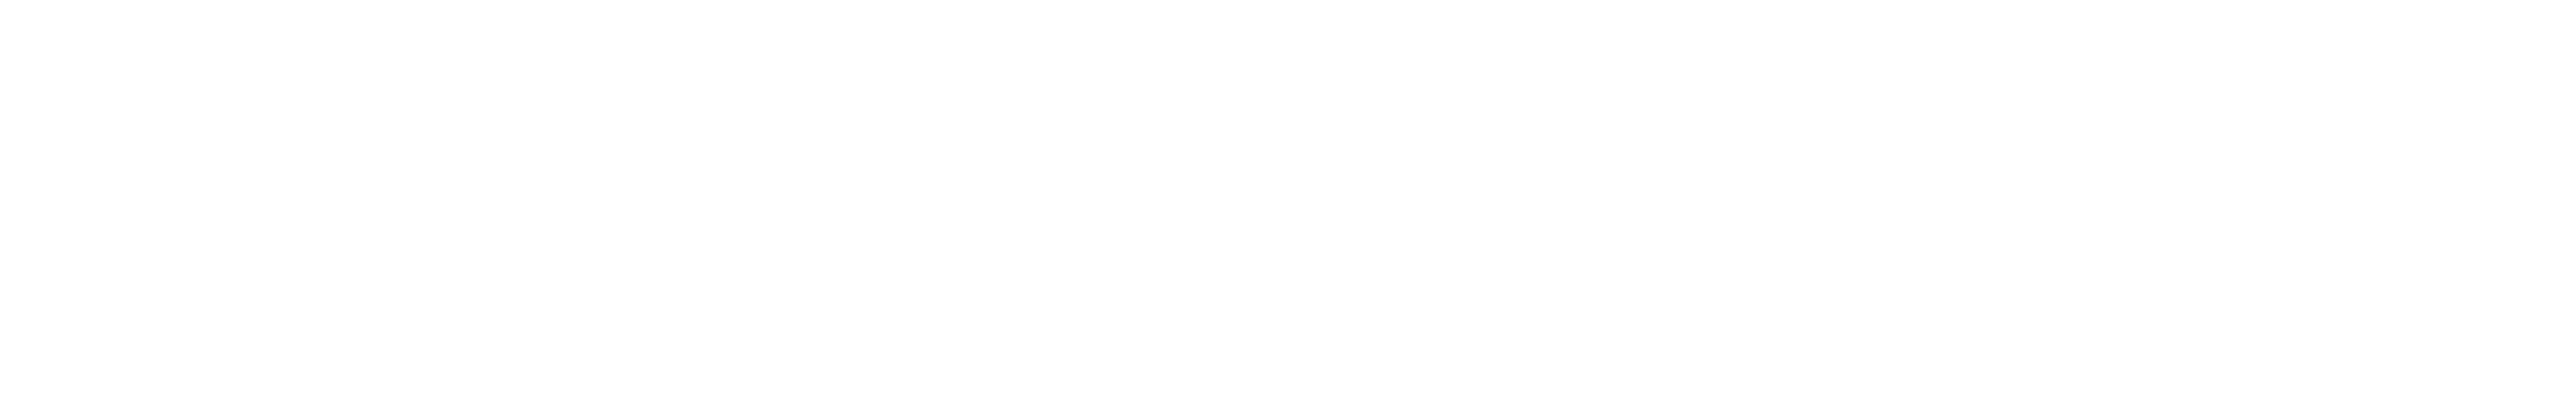 929.technology logo